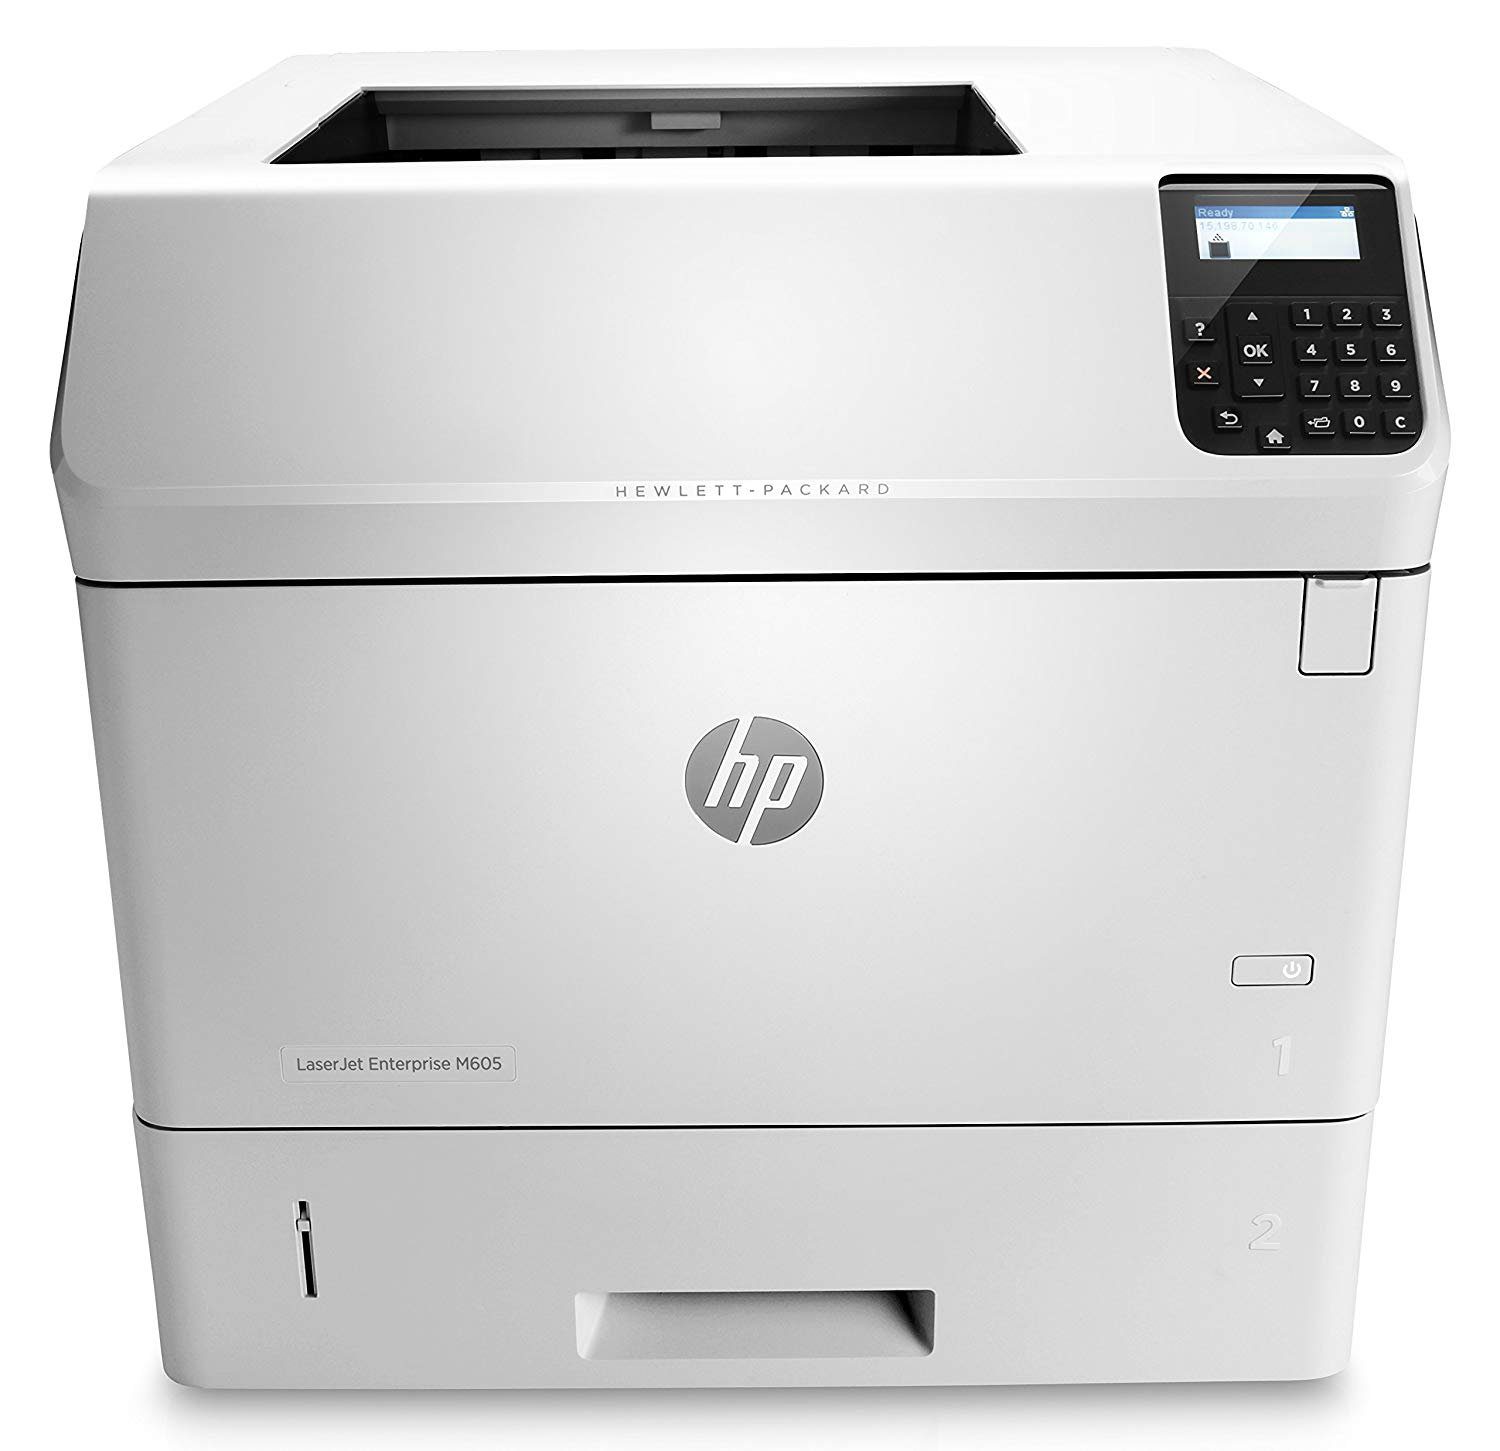 HP LaserJet Enterprise m605n Professioneller Drucker für große Arbeitsgruppen